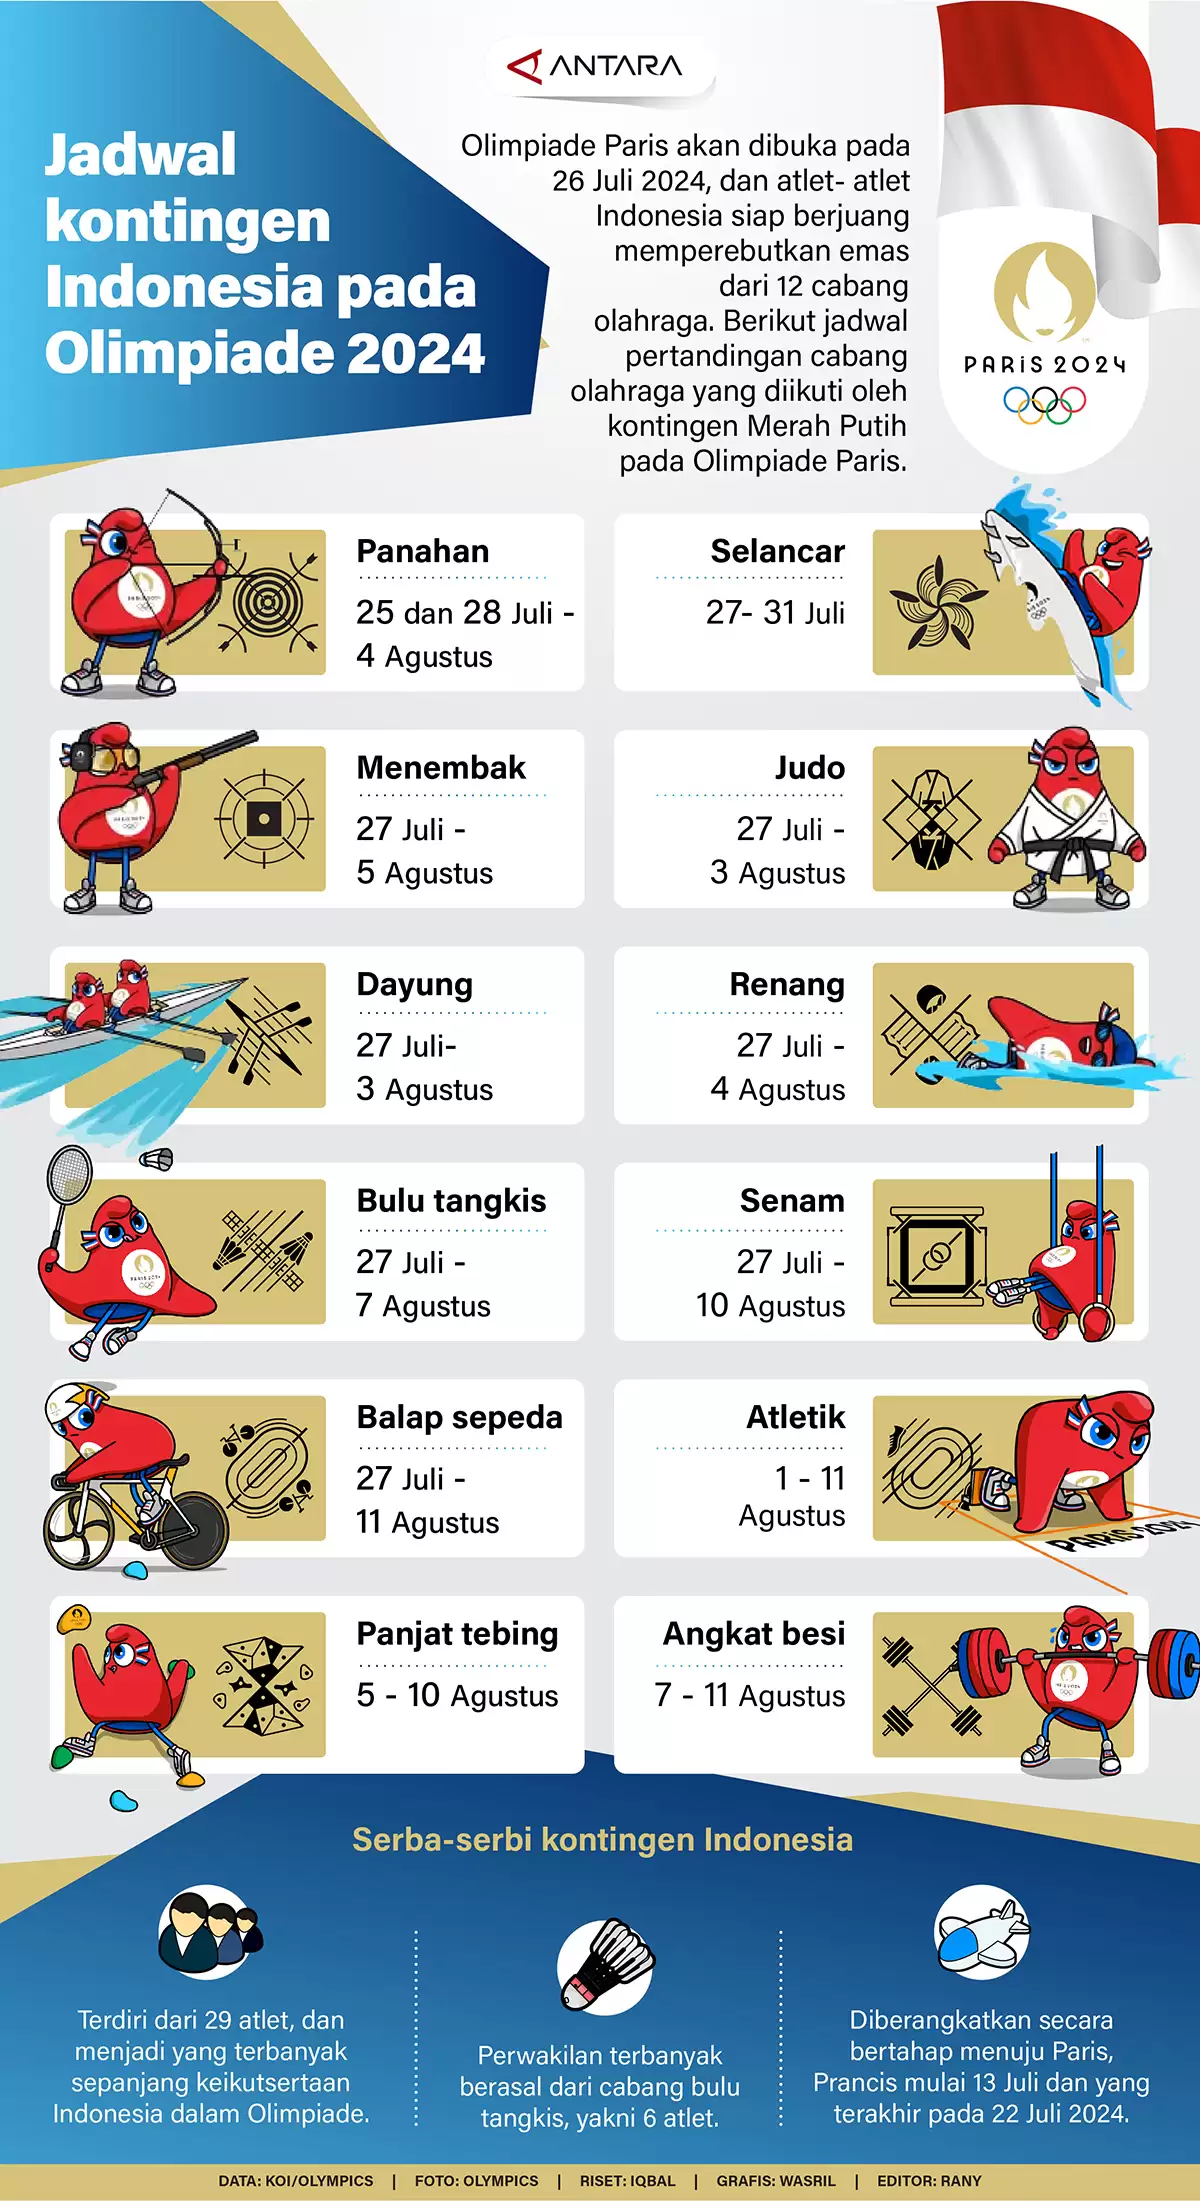 Jadwal Kontingen Indonesia pada Olimpiade 2024